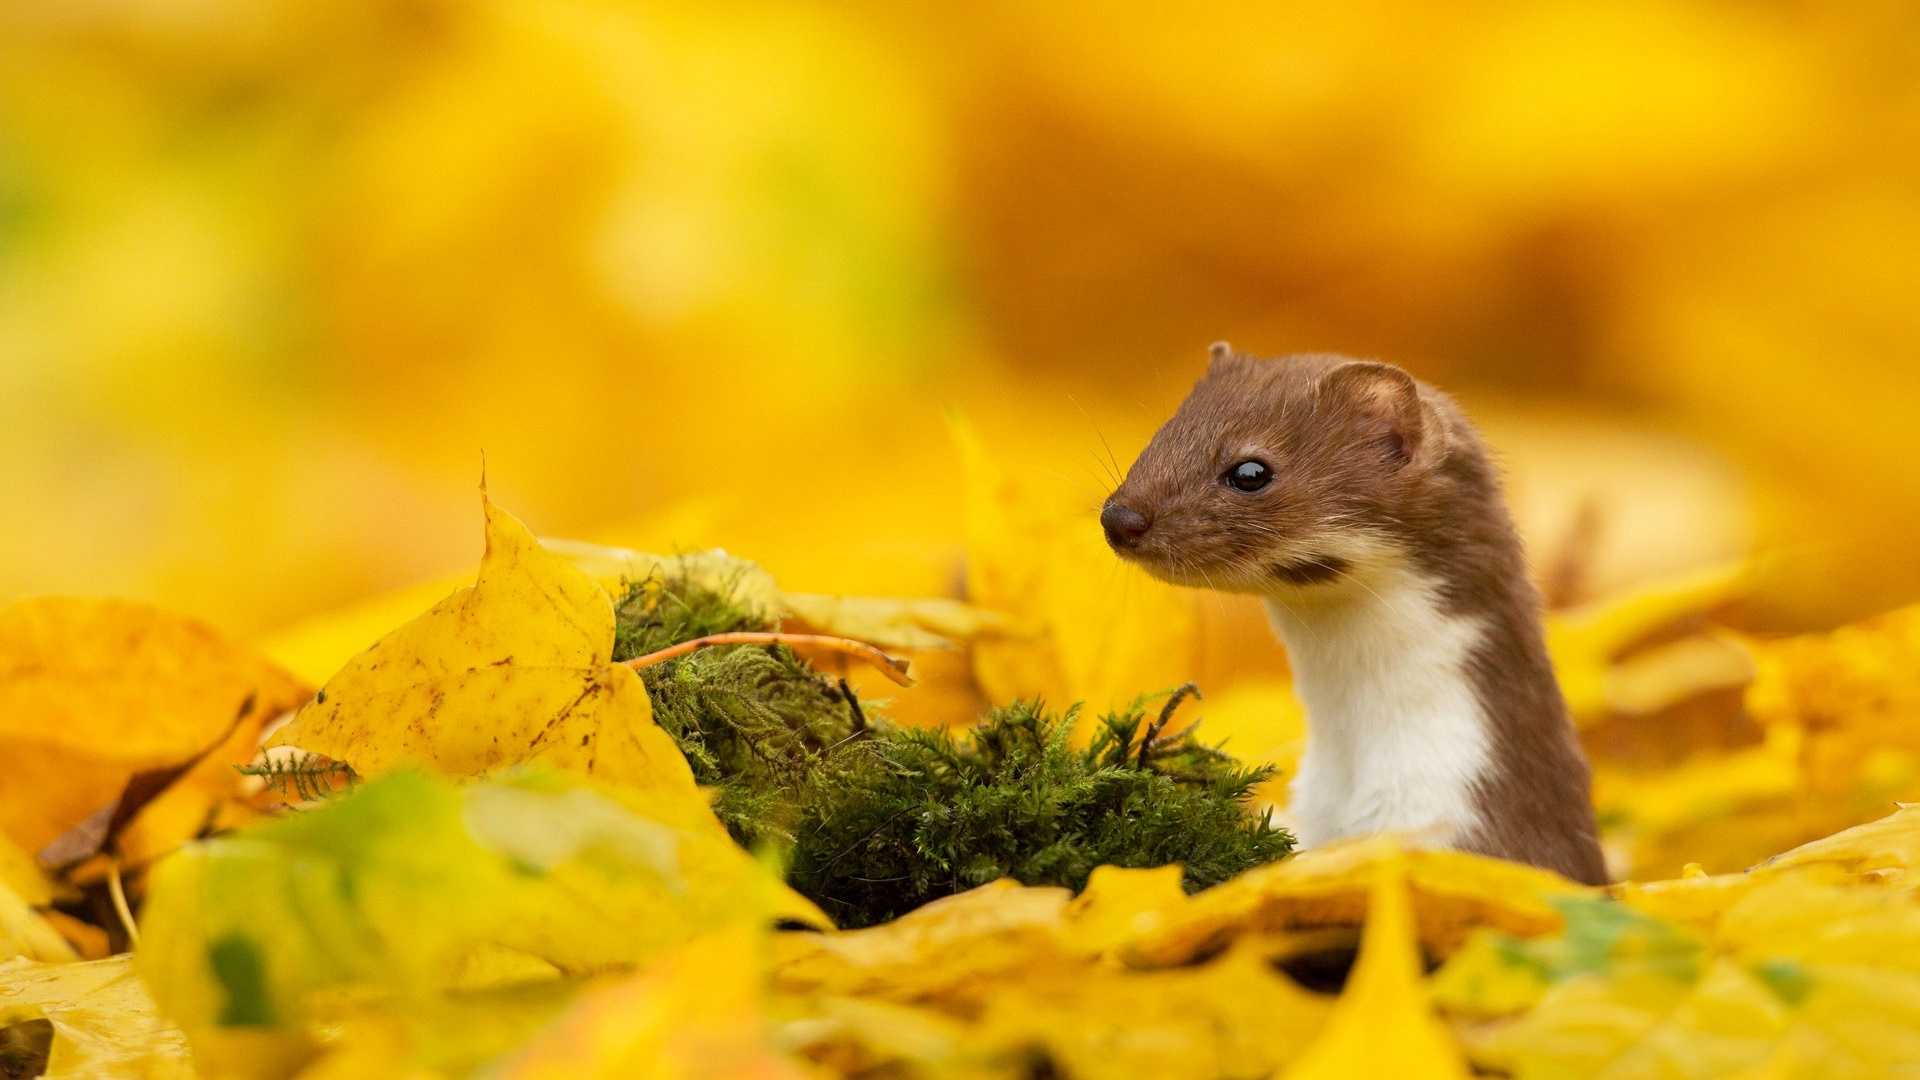 Animal In Autumn background wallpaper